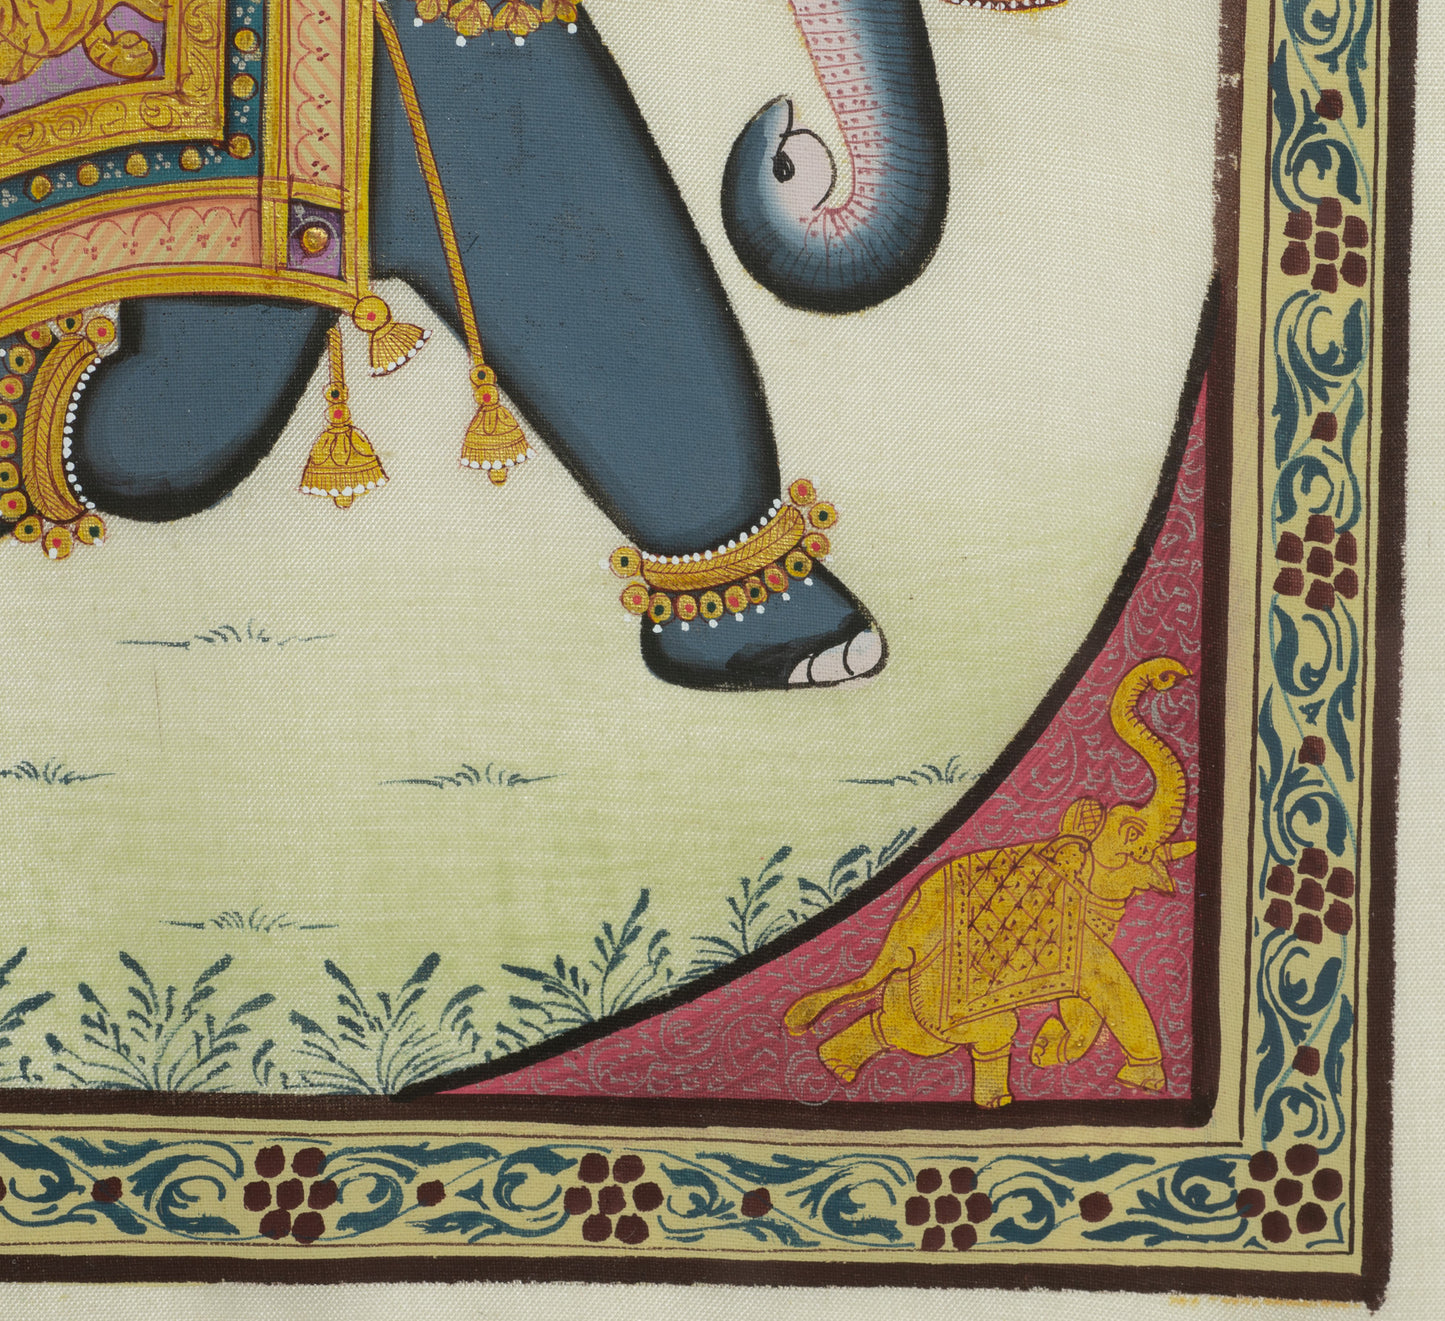 Vintage Indian Silk Painting of a Maharaja on Elephant, Framed & Glazed (Code 2773)